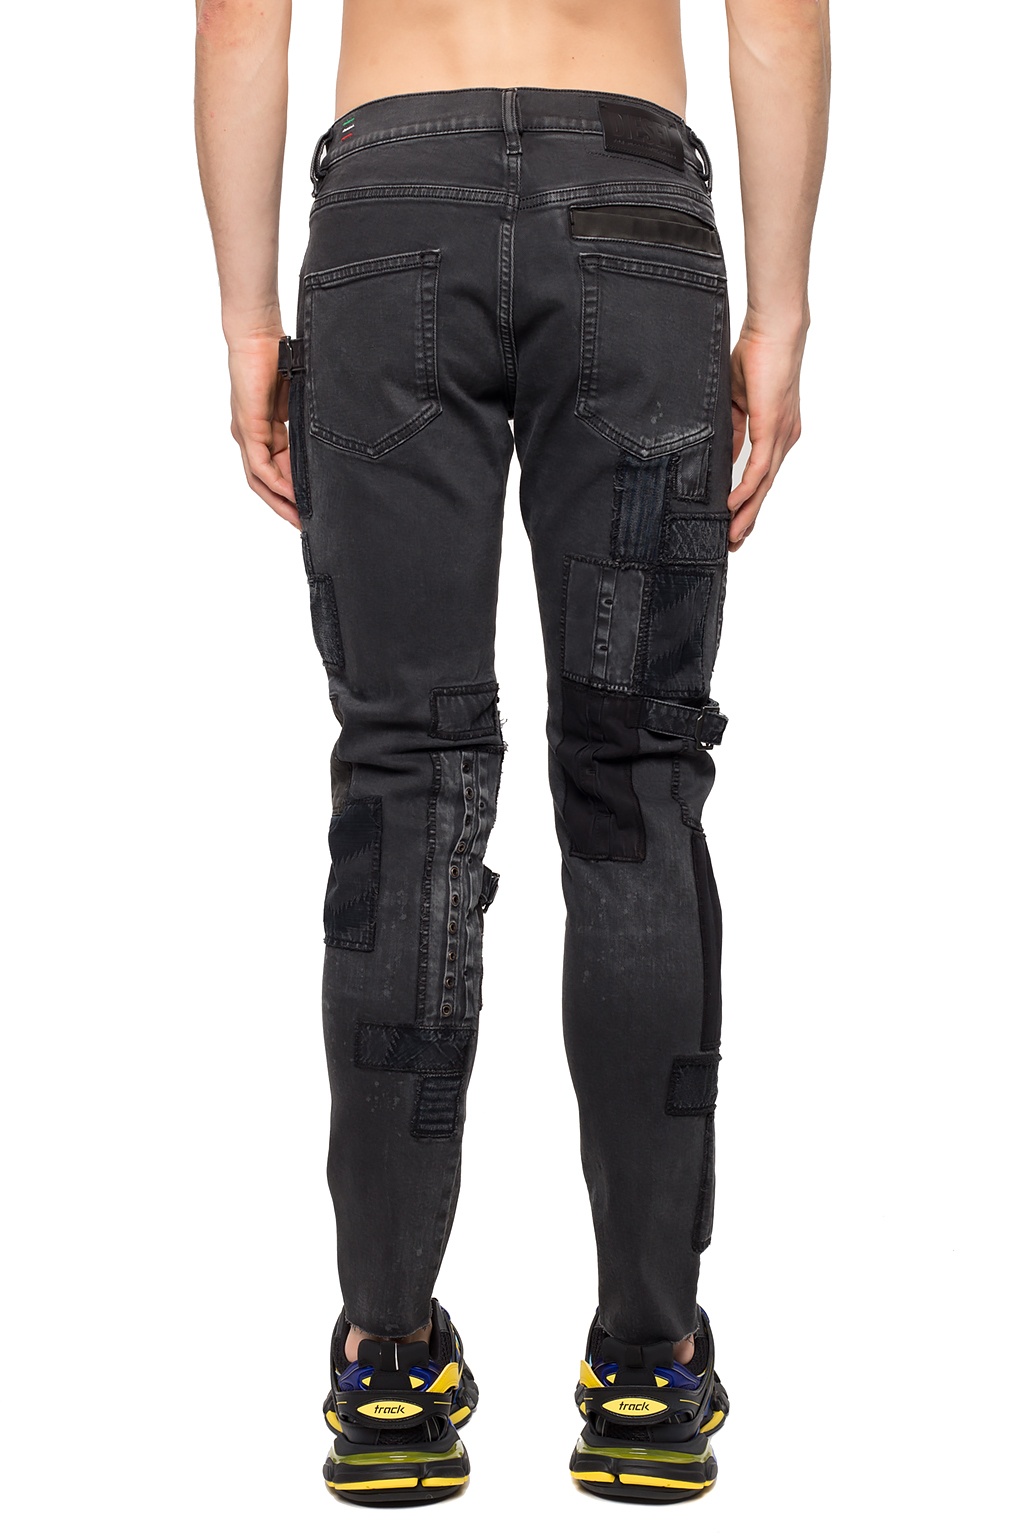 Diesel ‘D-Strukt’ jeans with patches | Men's Clothing | Vitkac